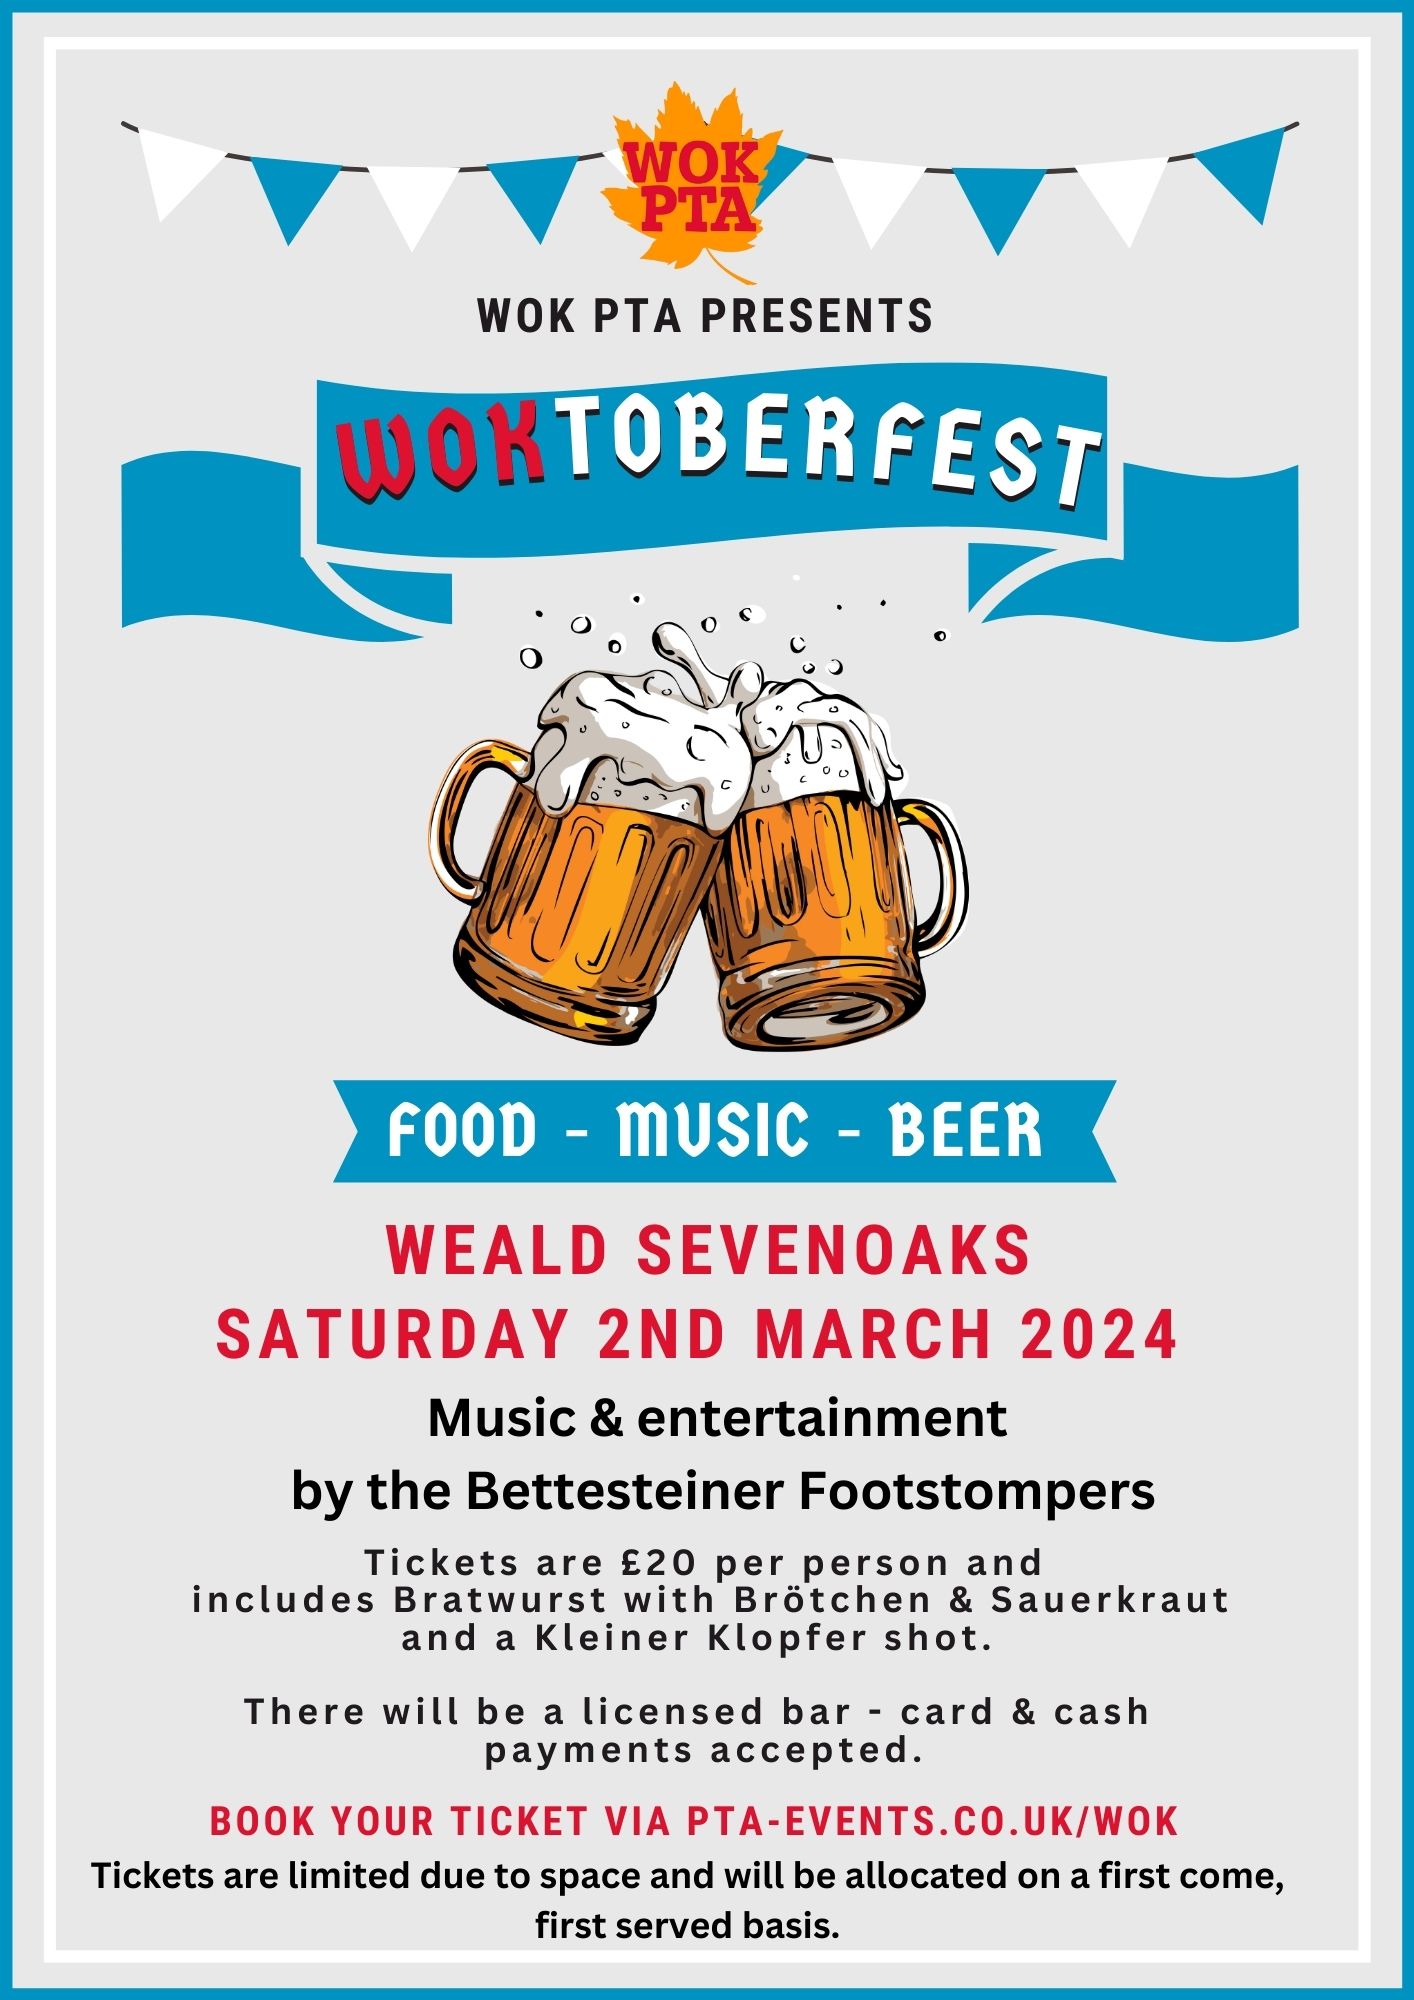 Sevenoaks WOKtoberfest 2nd March 2024